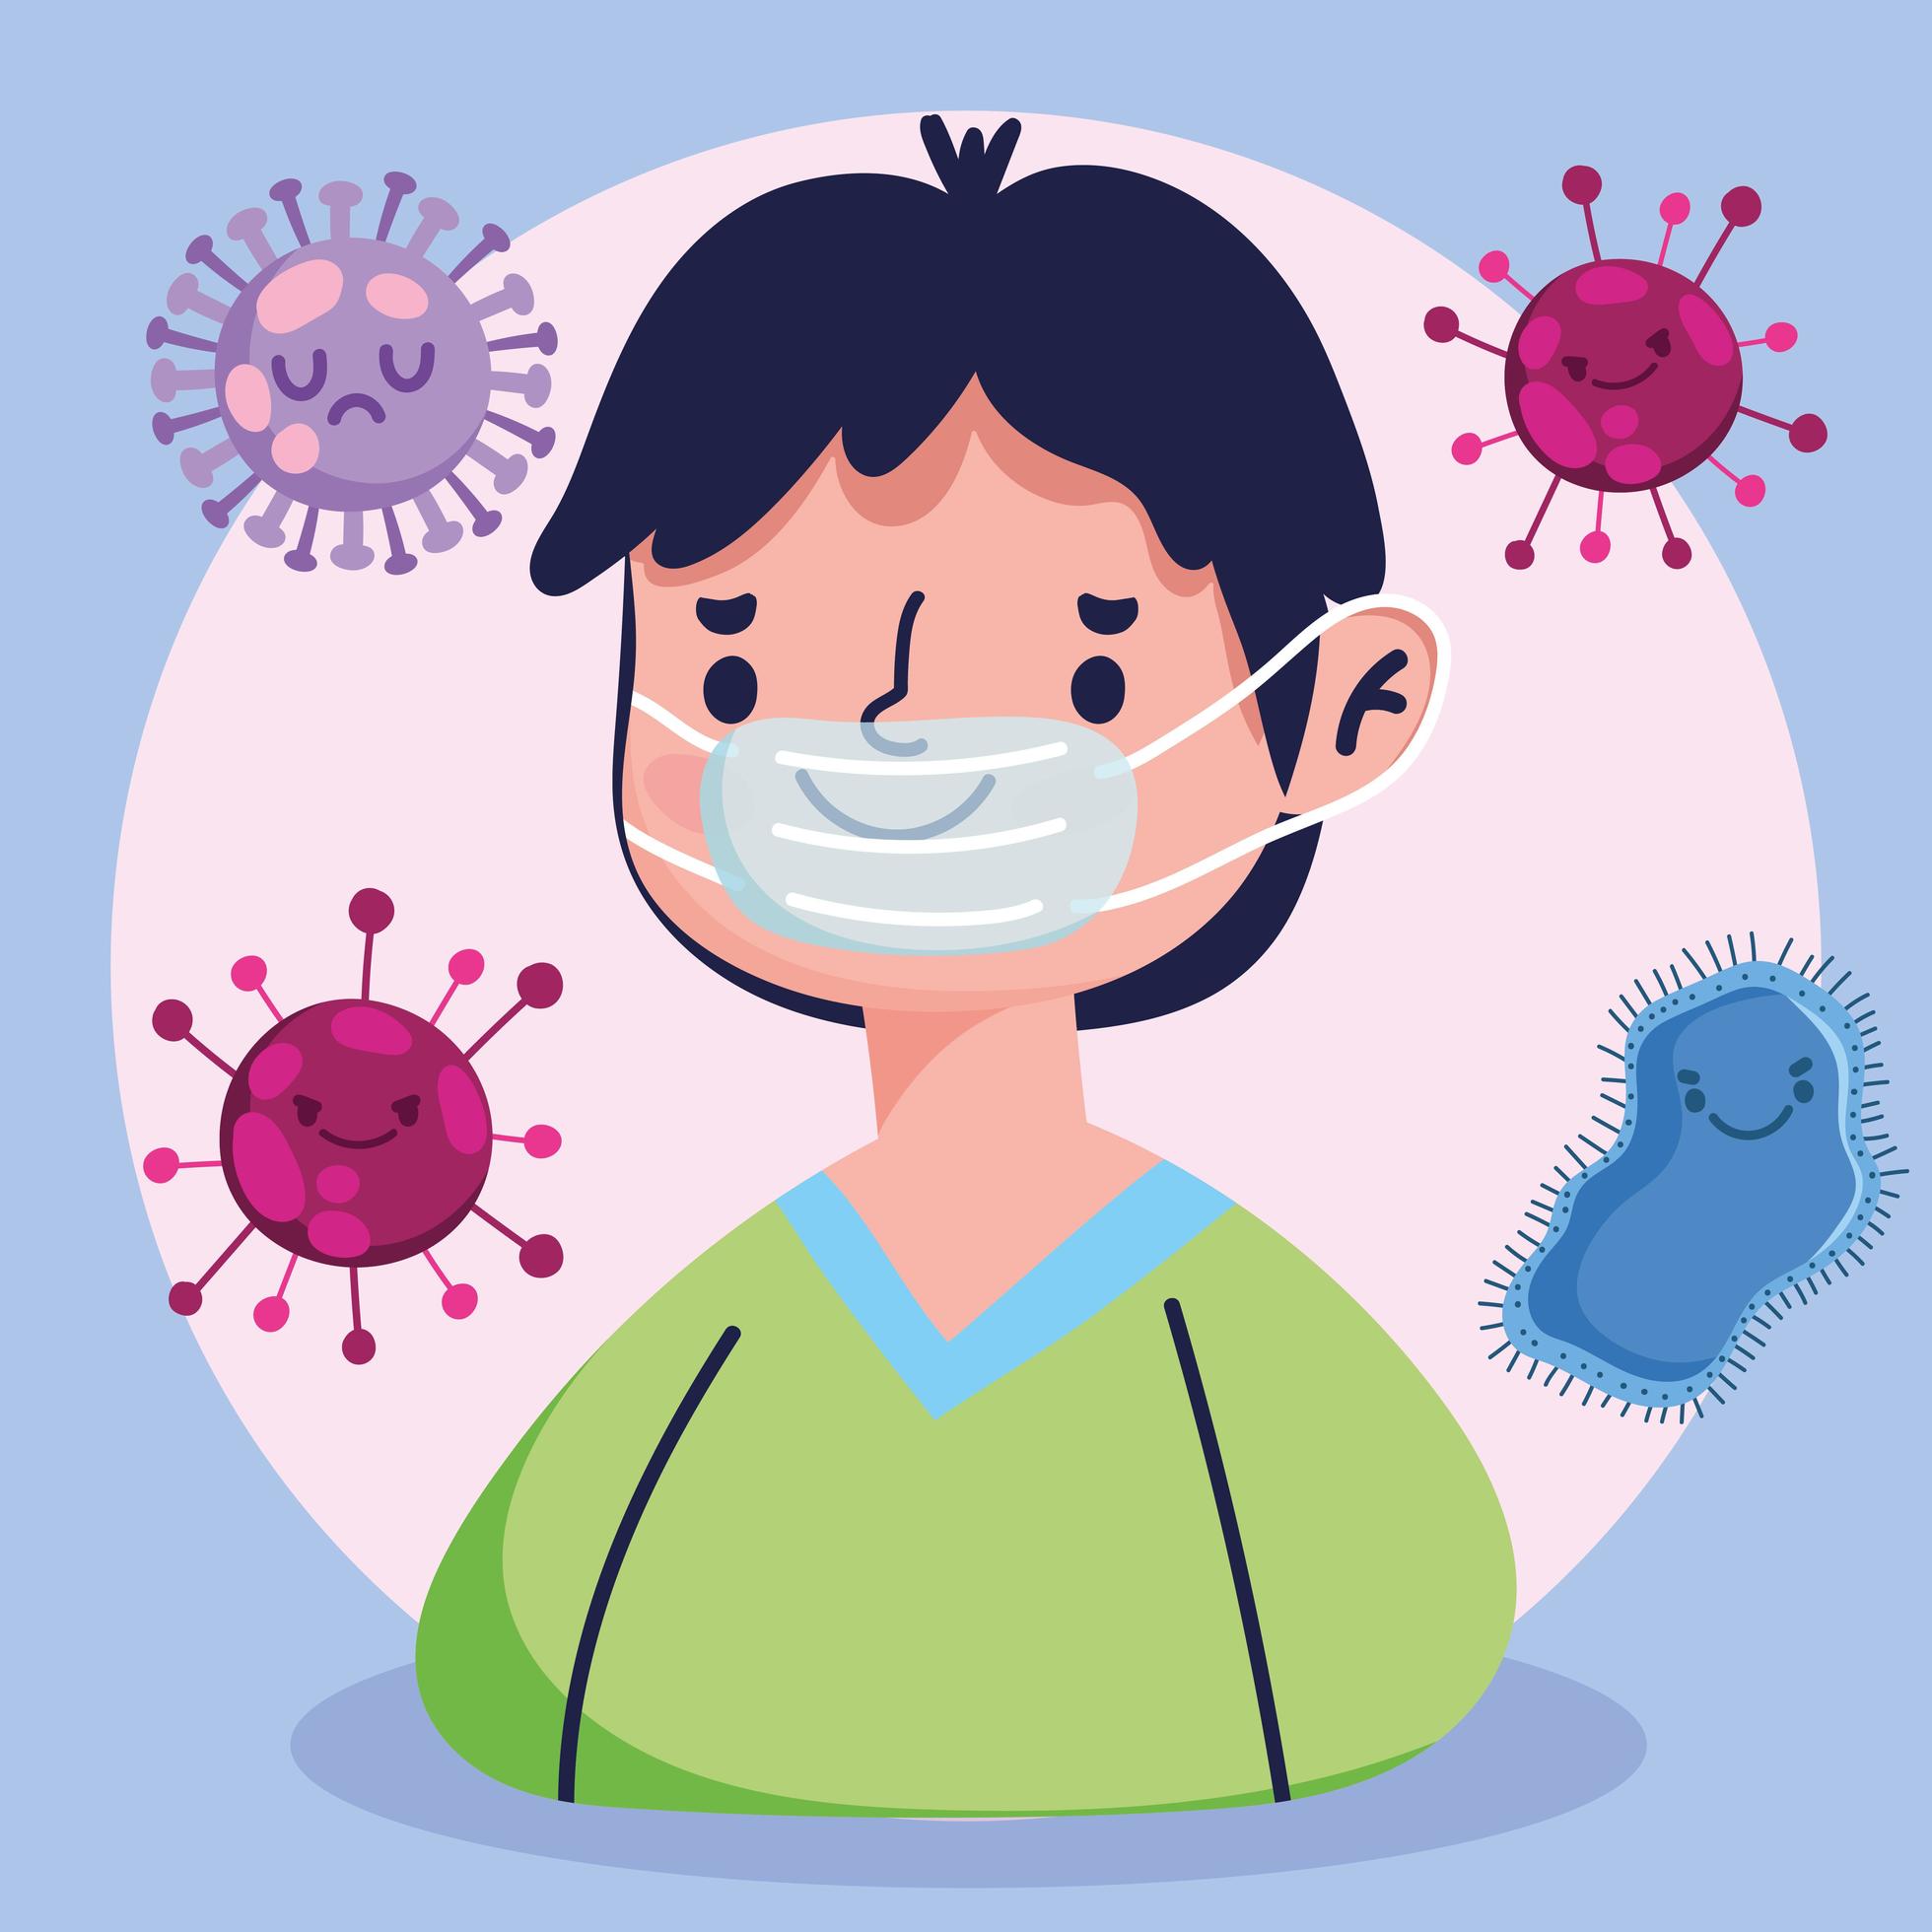 Covid 19 pandemia con niño con máscara protectora vector